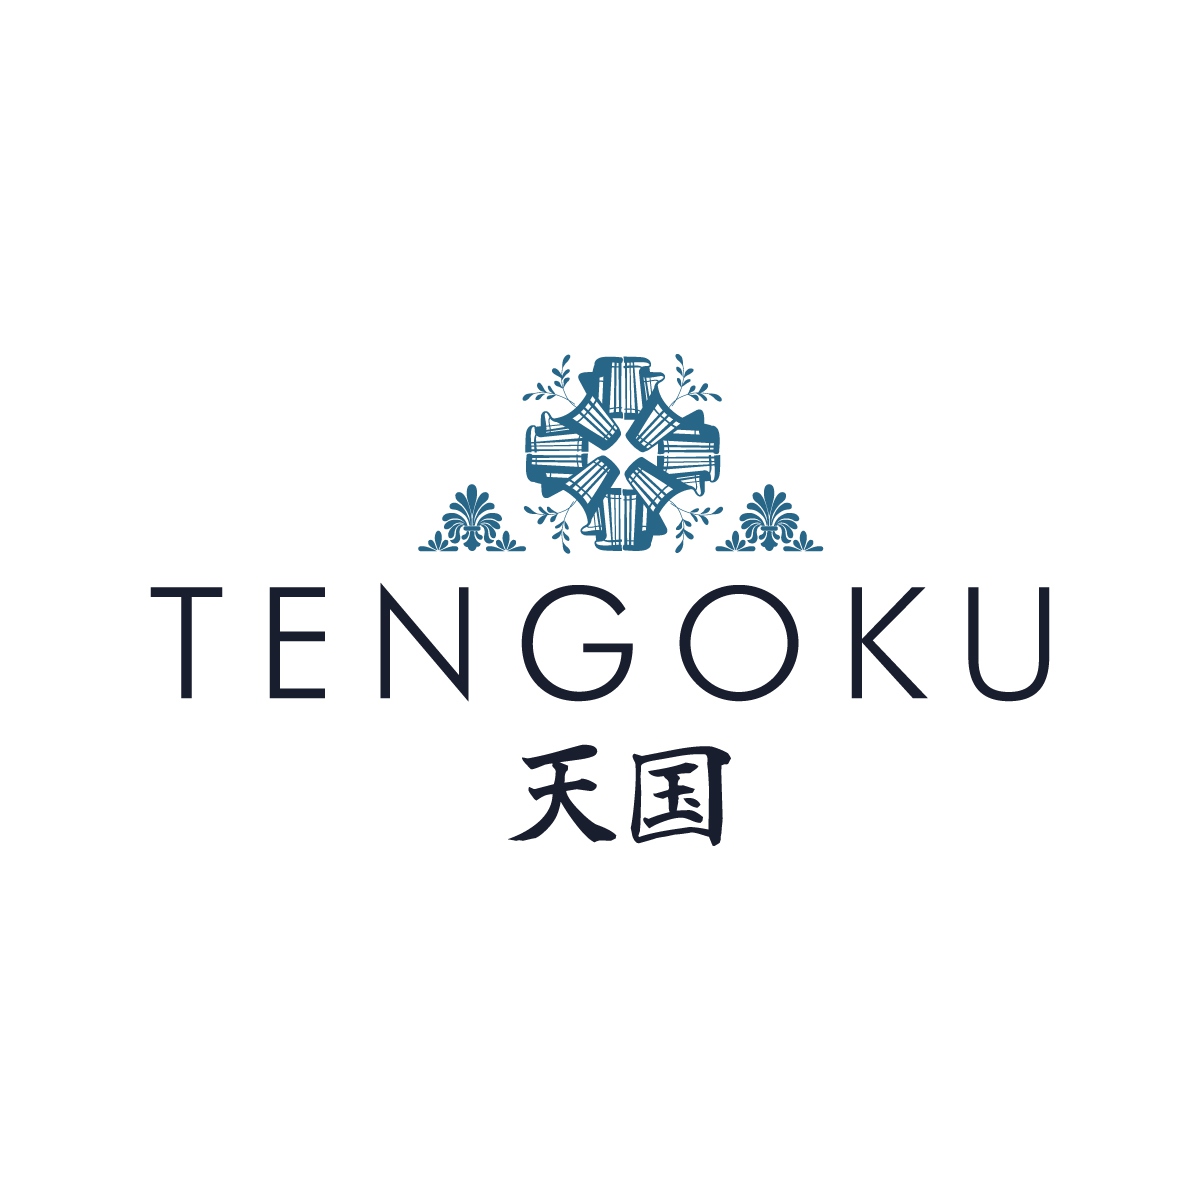 Tengoku “Spring” menu